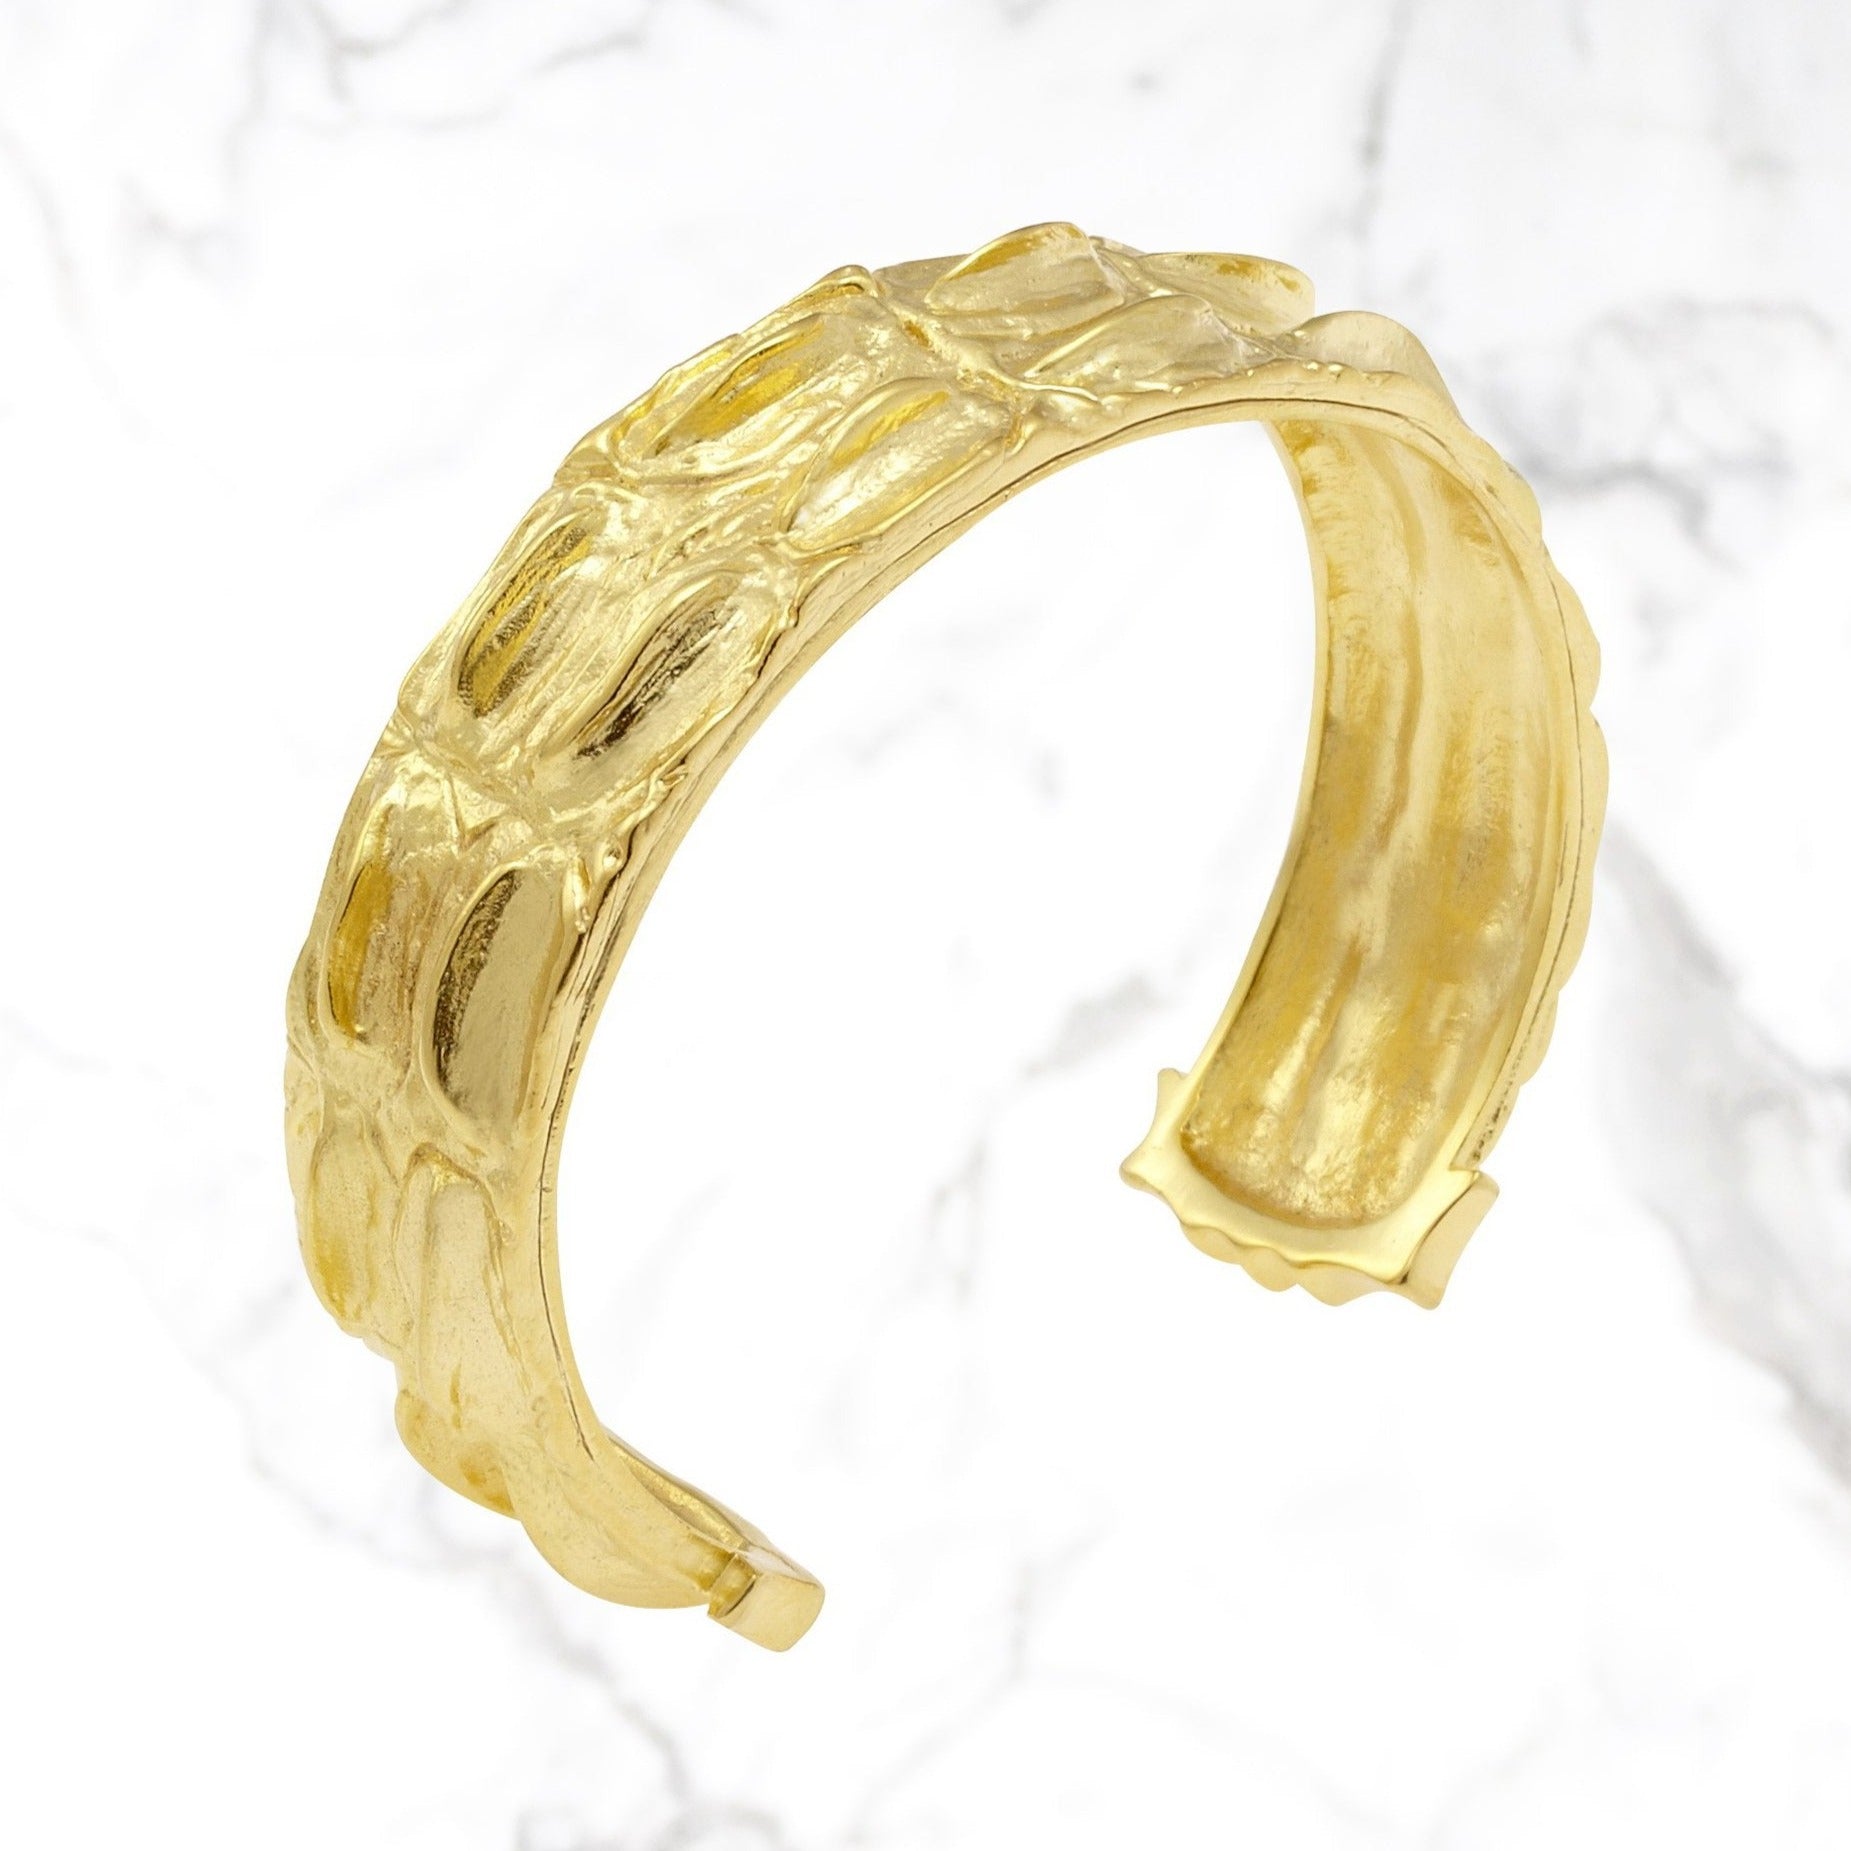 M2 gold bracelet